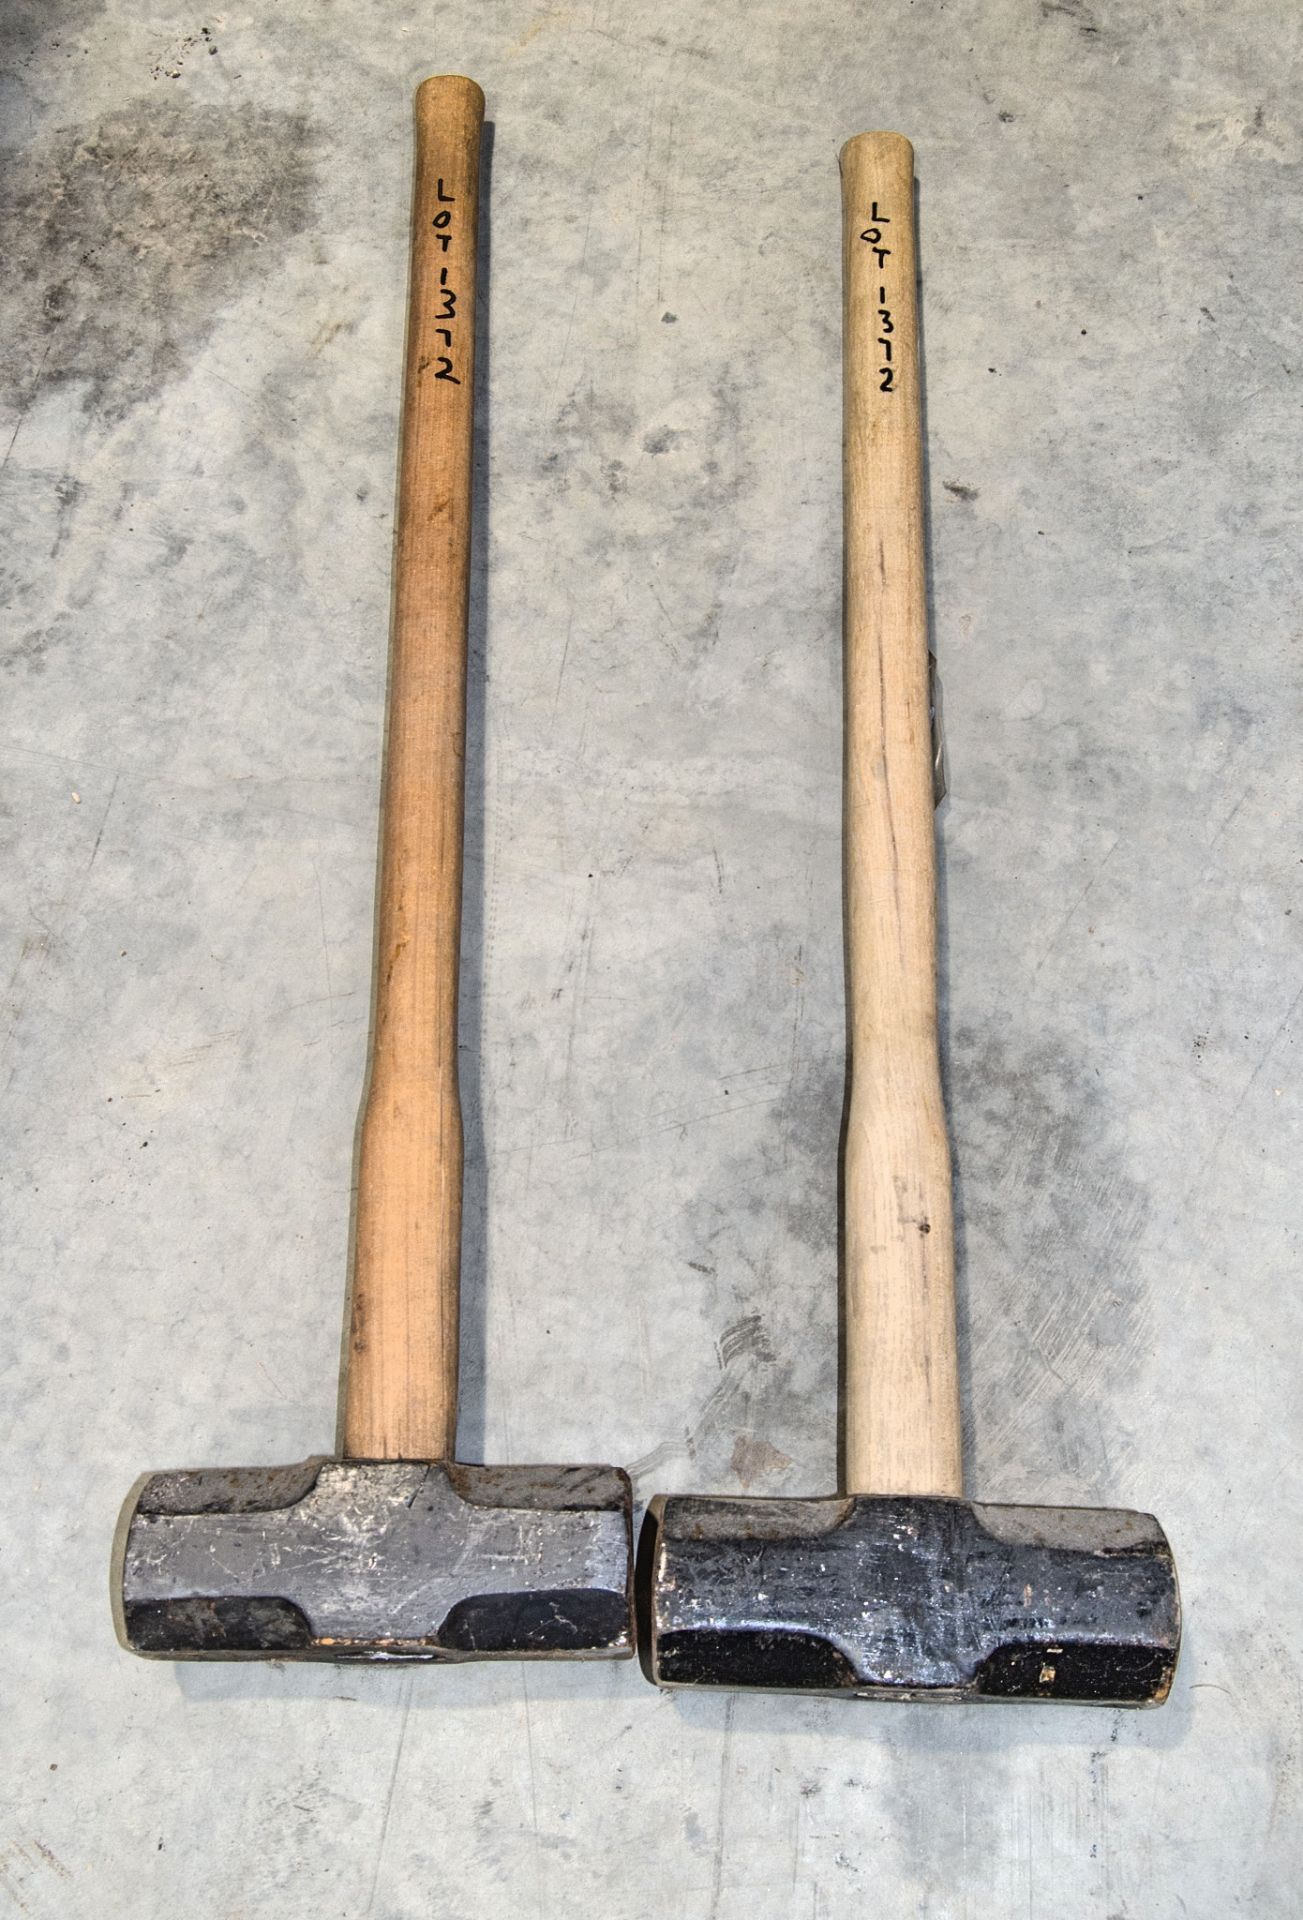 2 - 14lb sledgehammers